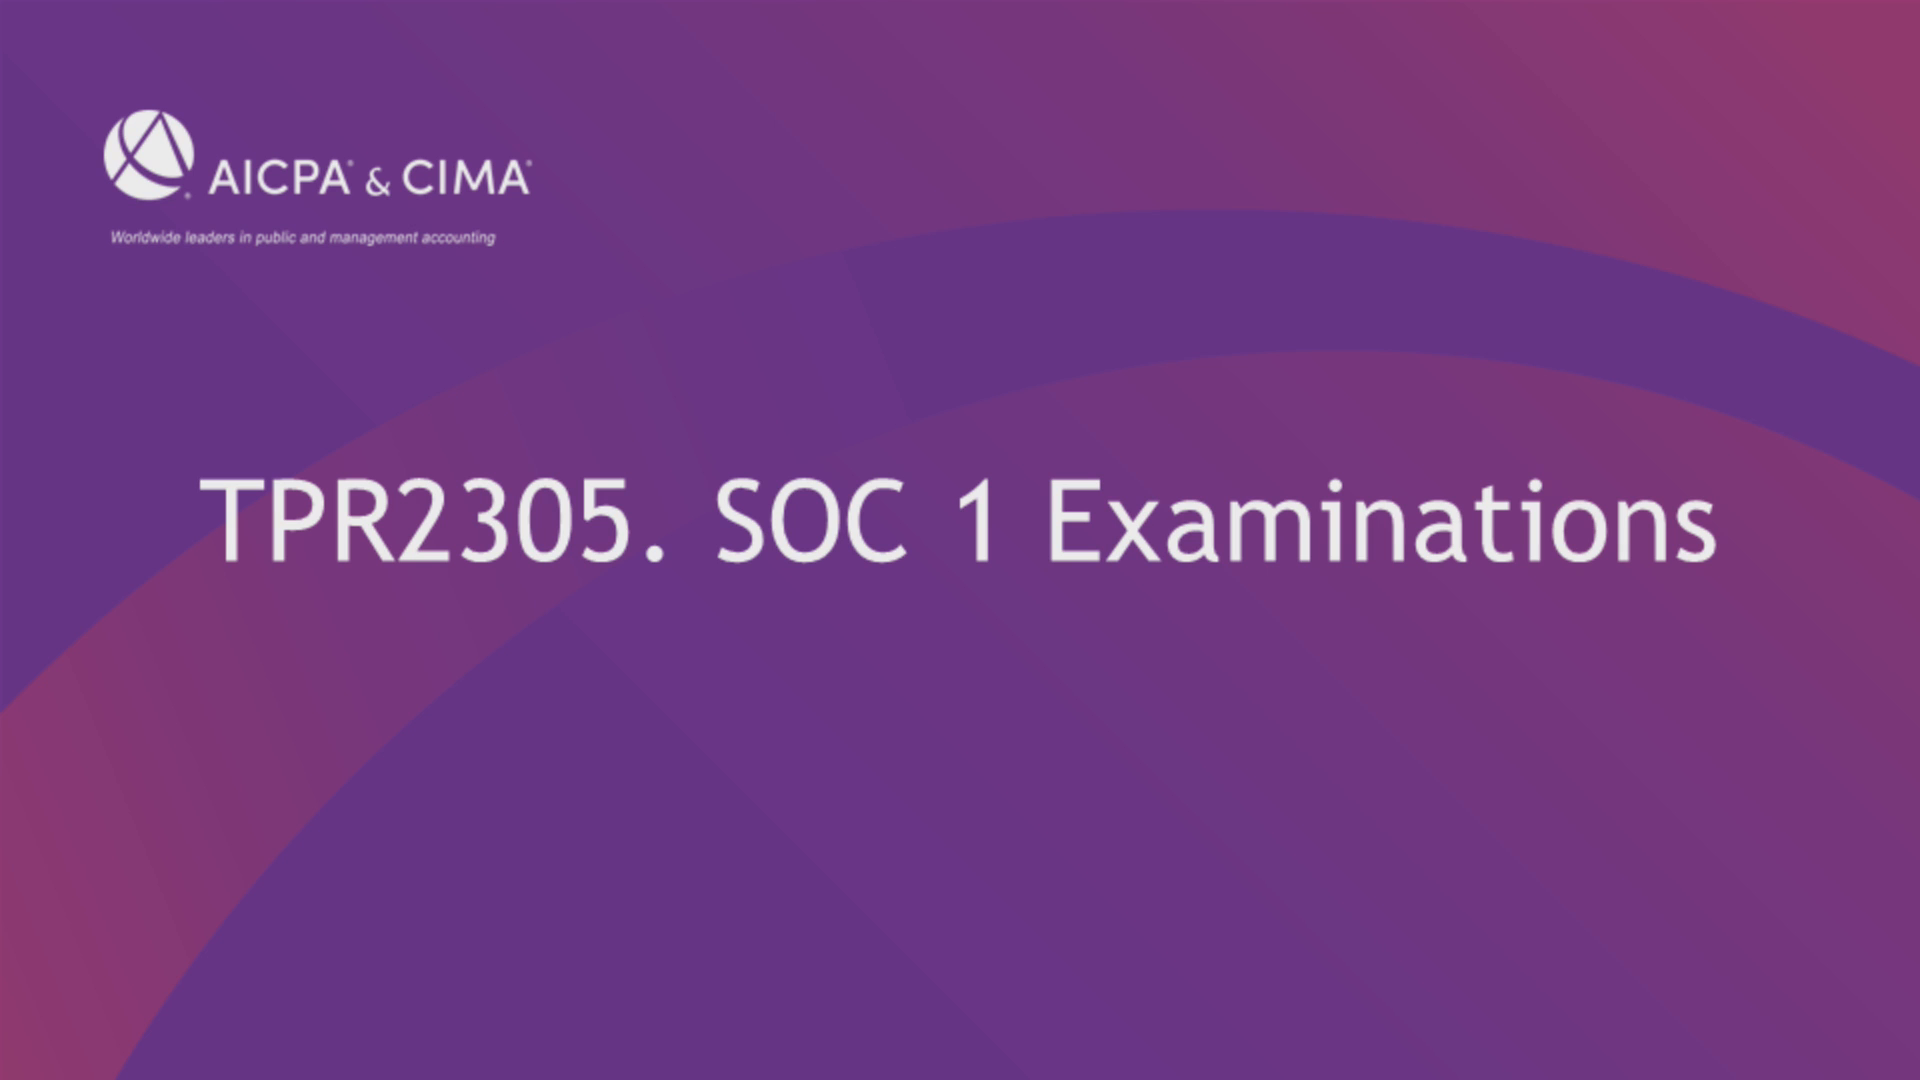 SOC 1 Examinations